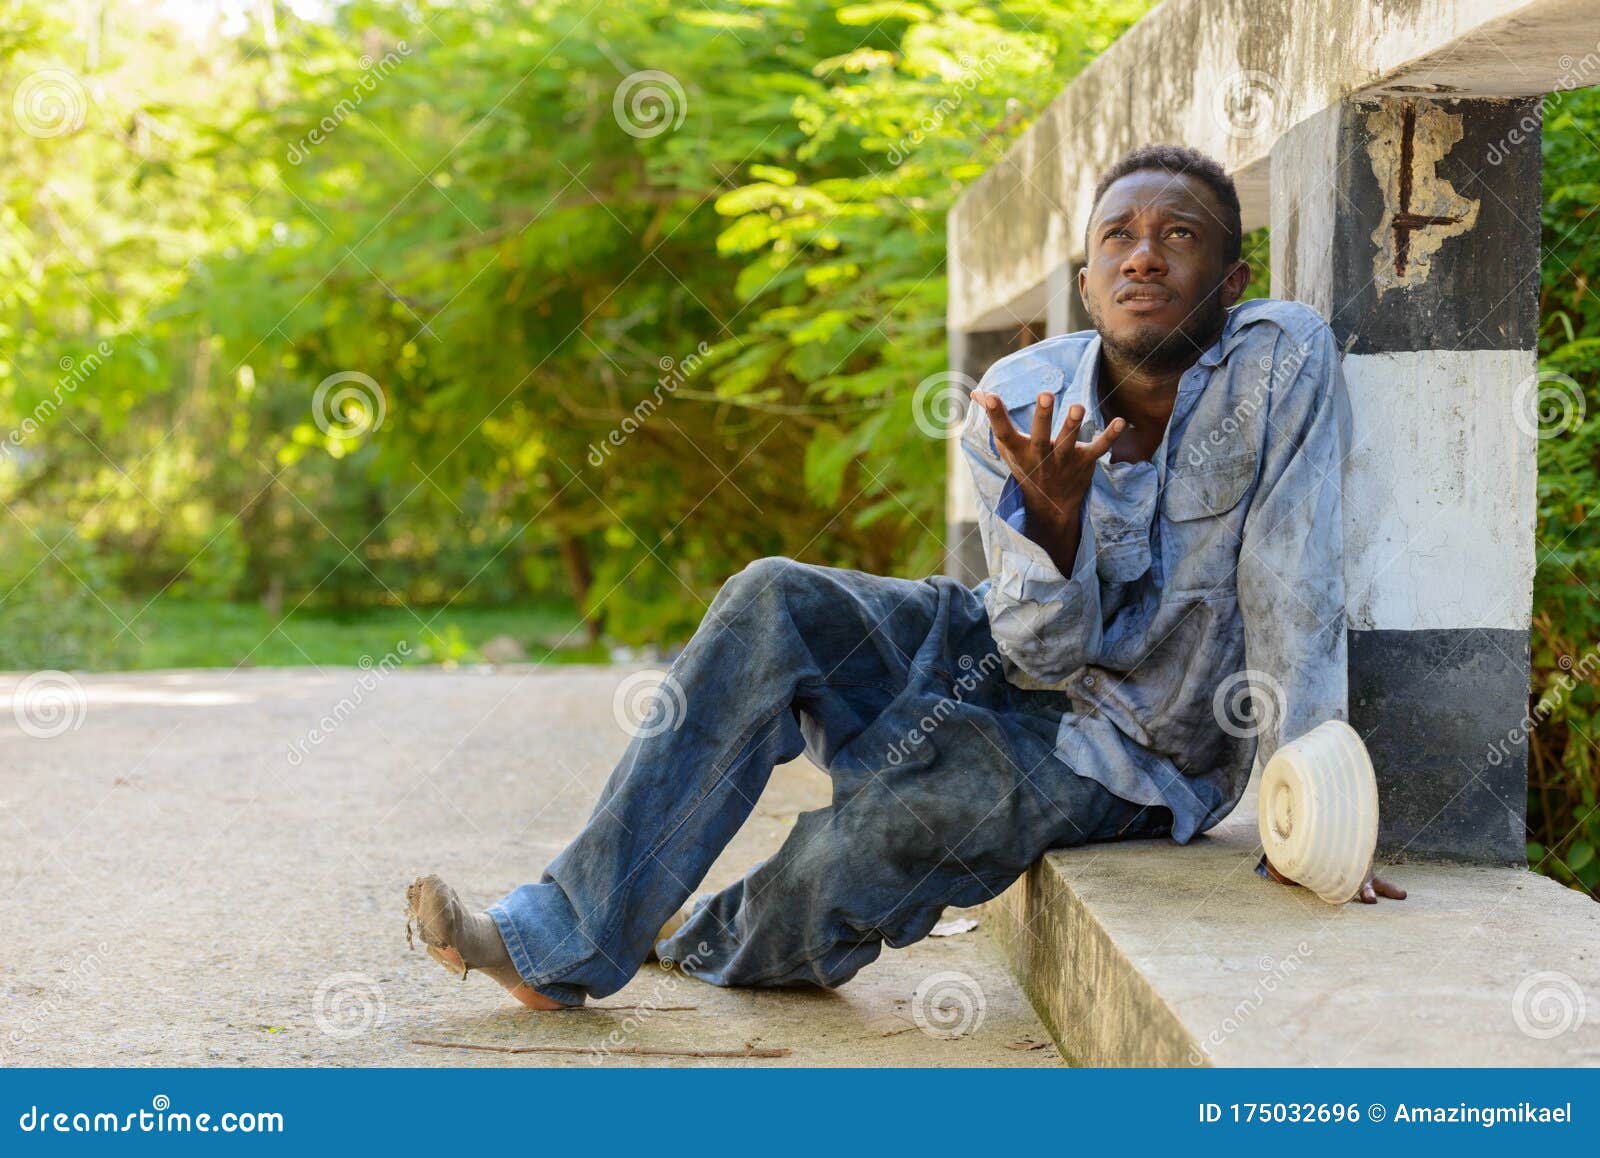 young-homeless-african-man-begging-food-bridge-portrait-young-homeless-african-man-bridge-streets-175032696.jpg